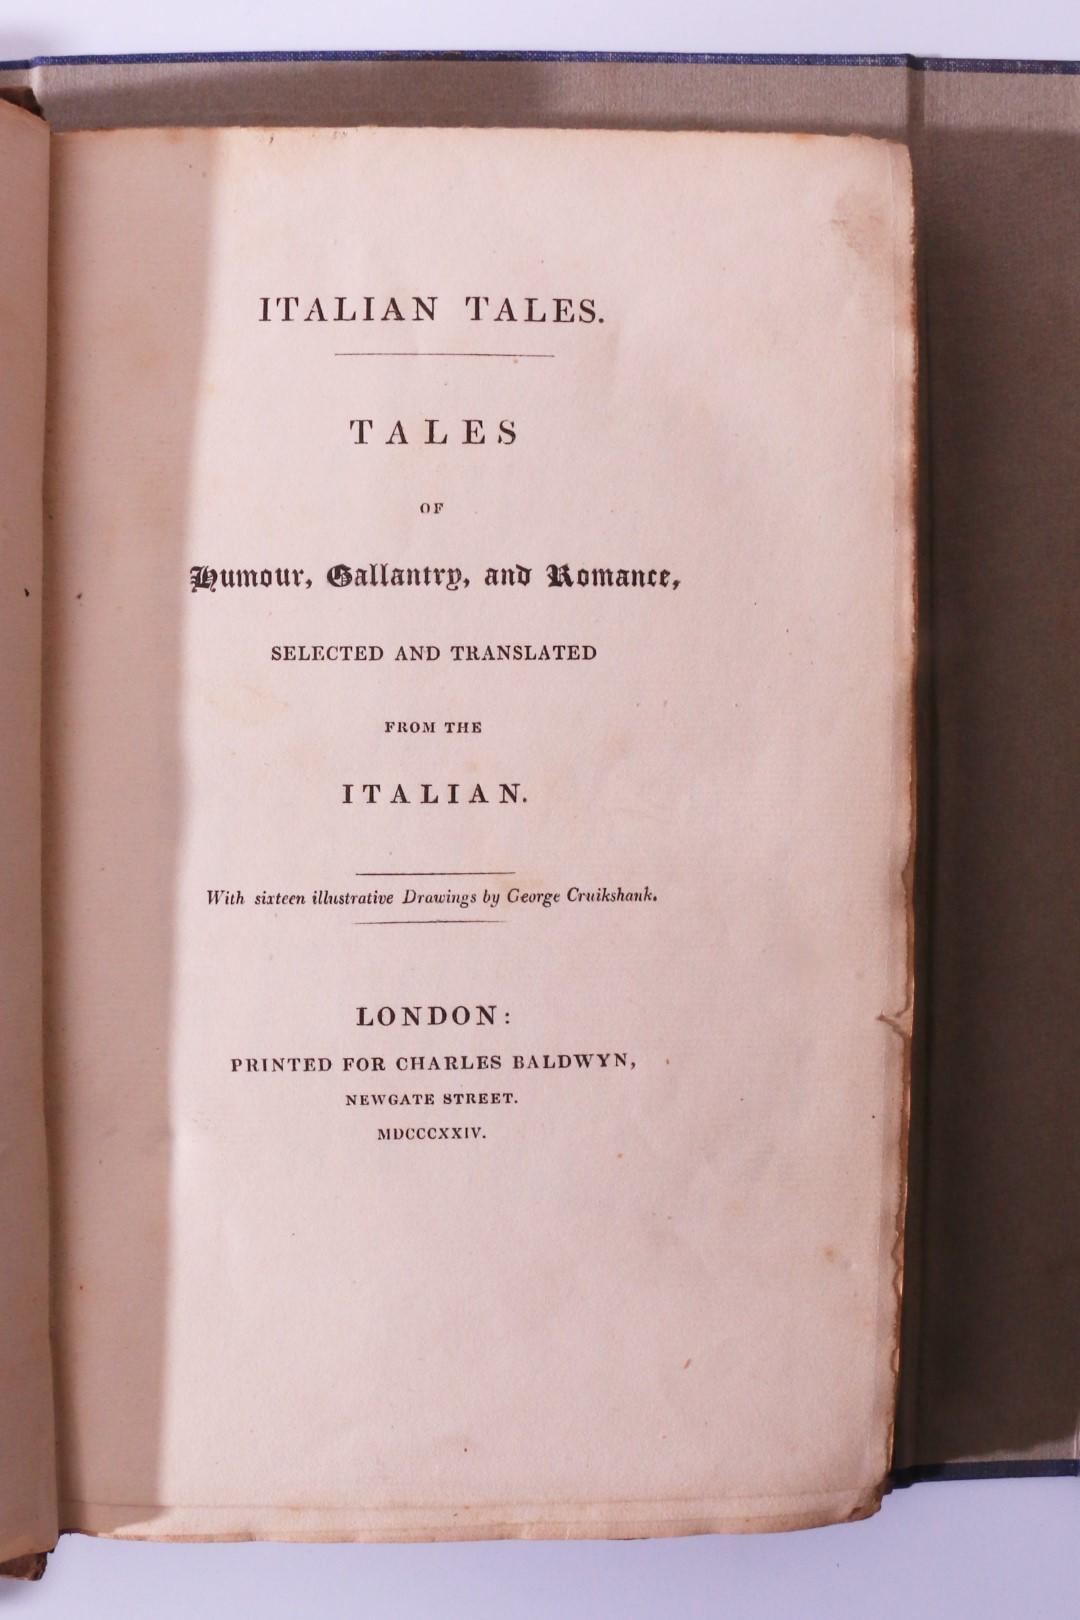 Anonymous [Thomas Roscoe] - Italian Tales: Tales of Humour, Gallantry, & Romance - Charles Baldwyn, 1824, First Edition.